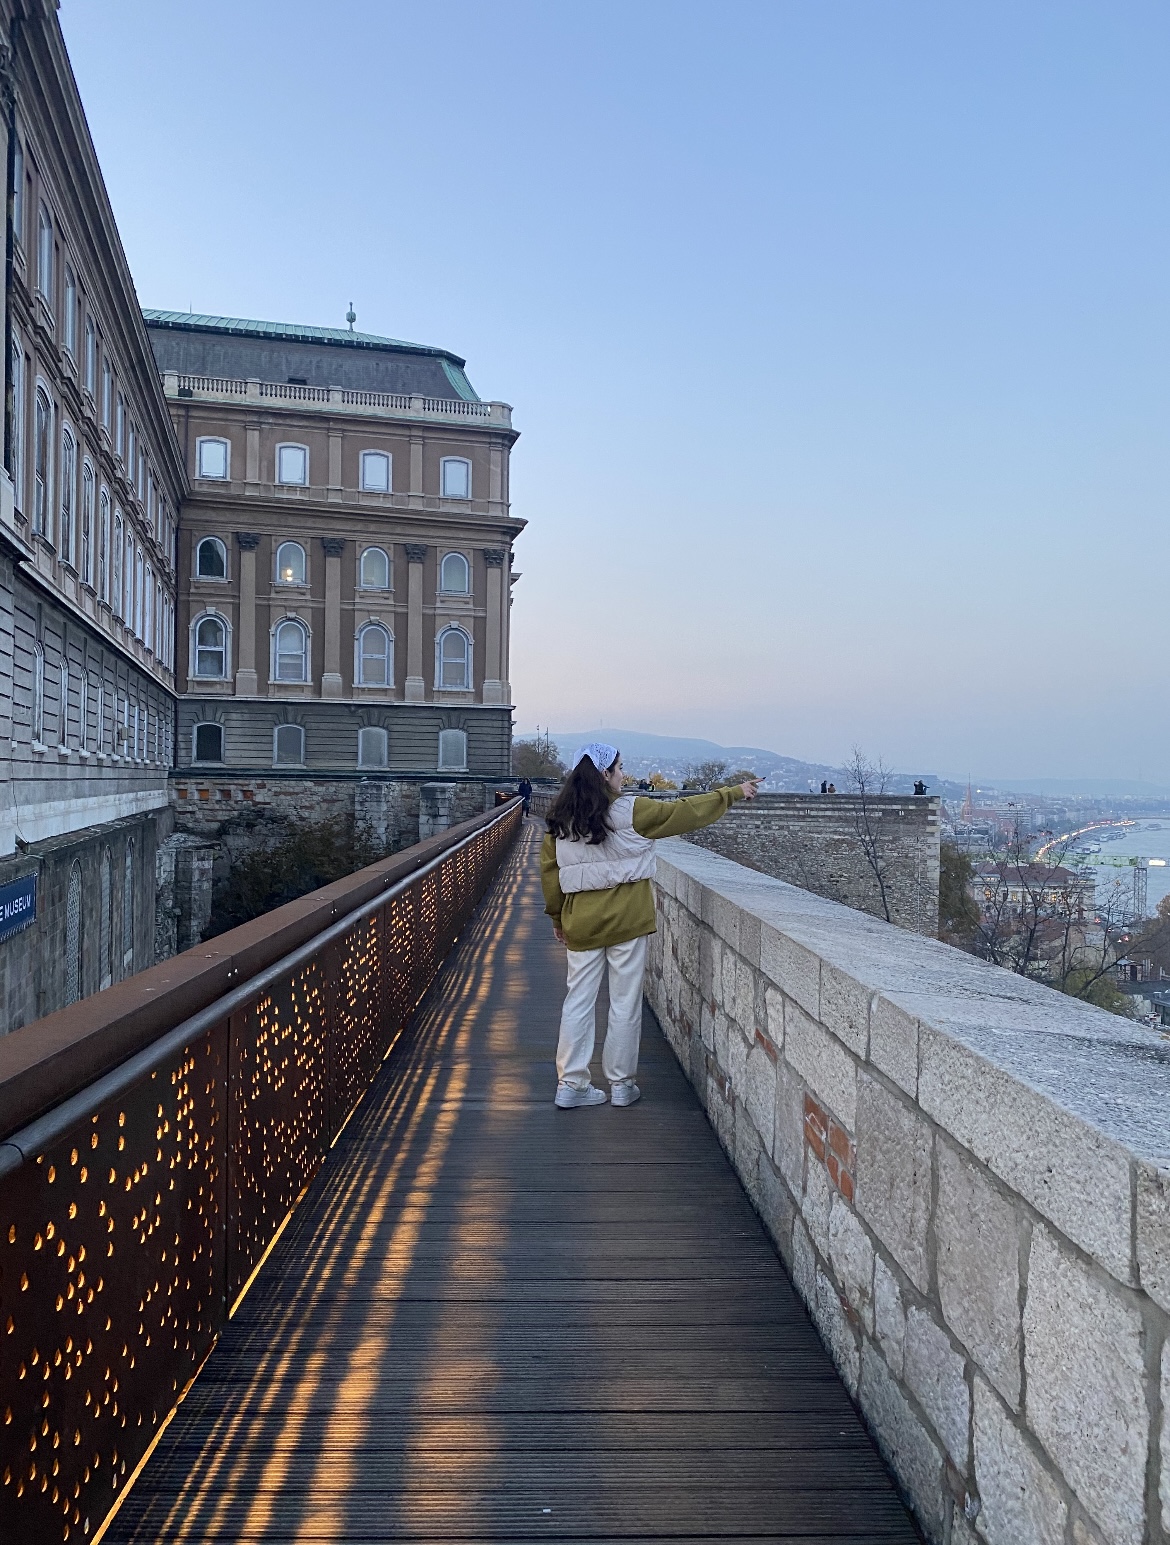 The charming Budapest, through my eyes